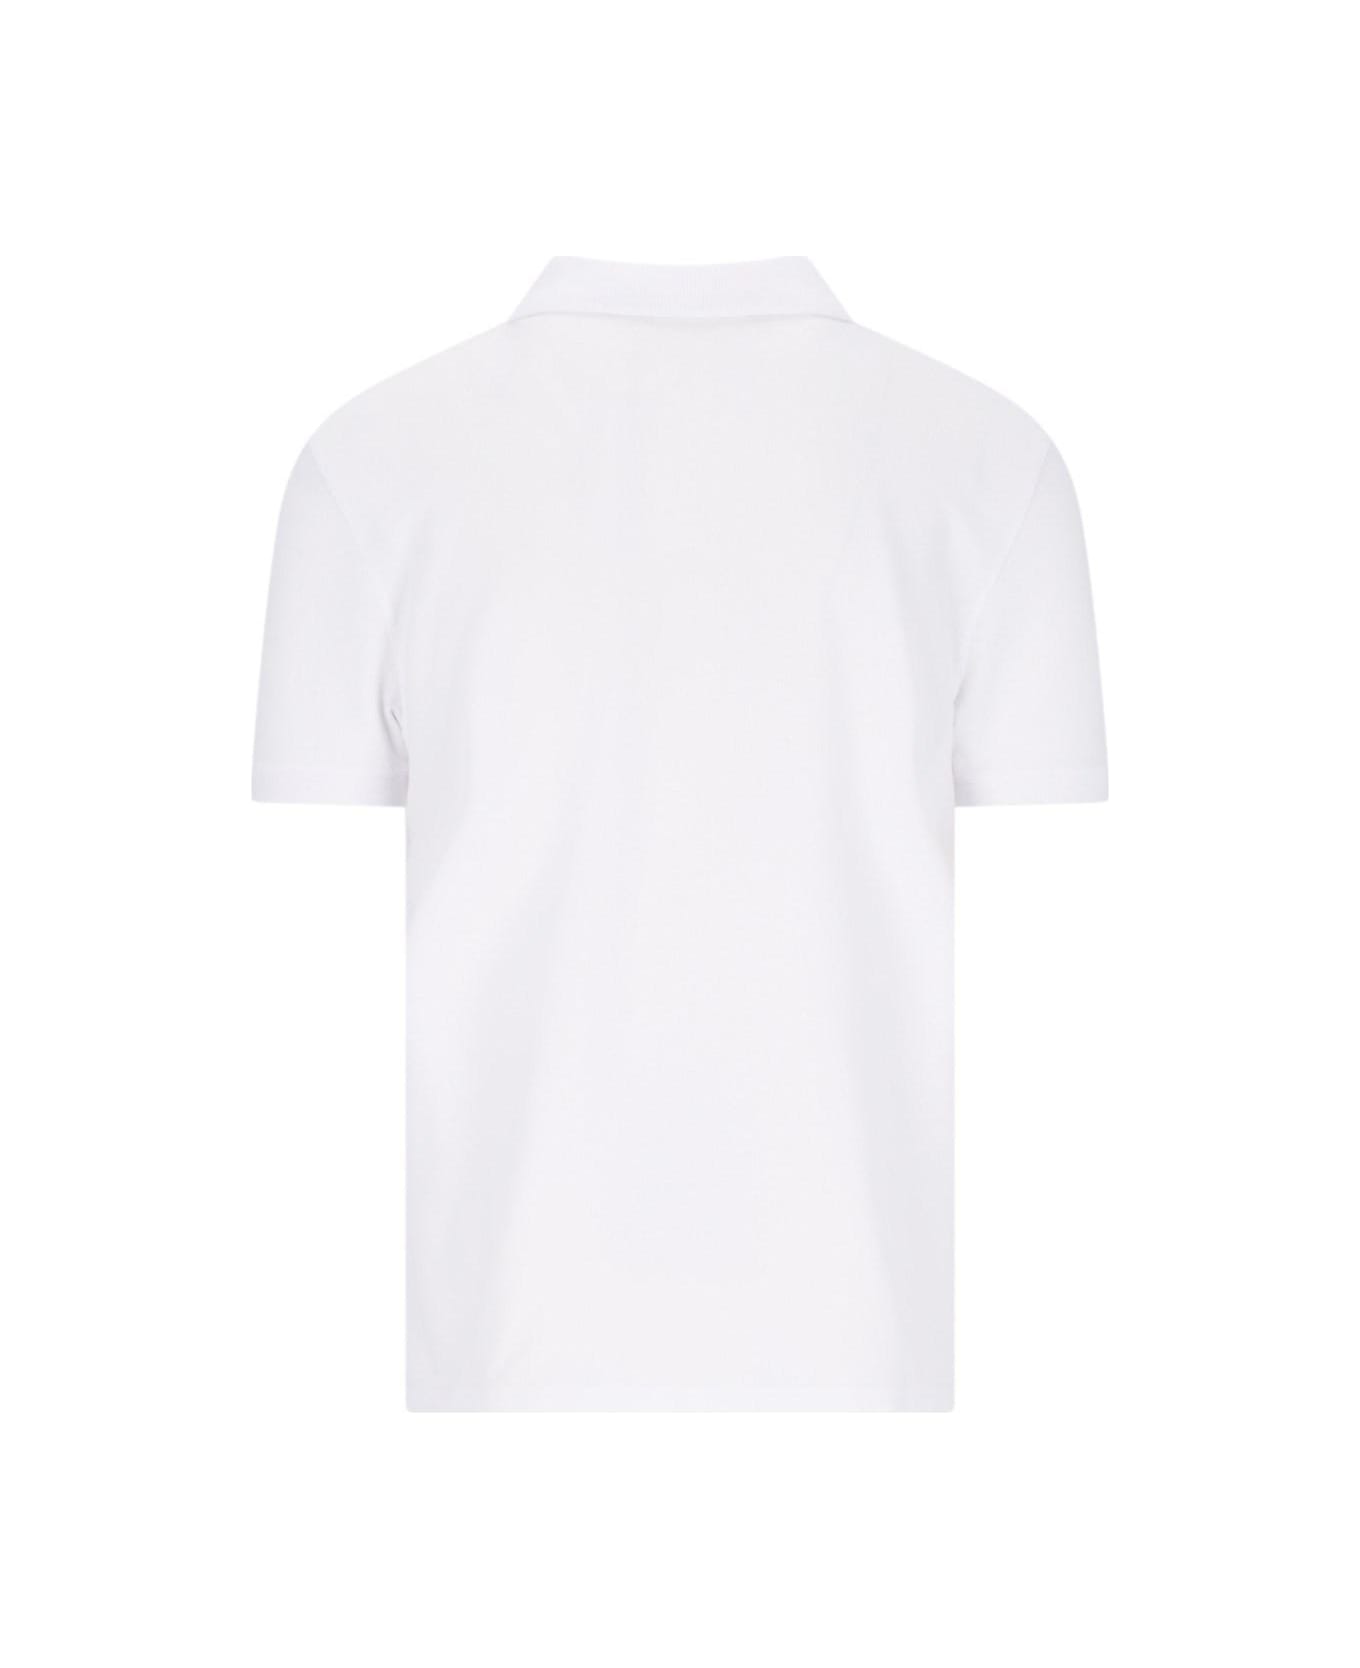 Maison Kitsuné Polo Shirt 'fox Head' - White